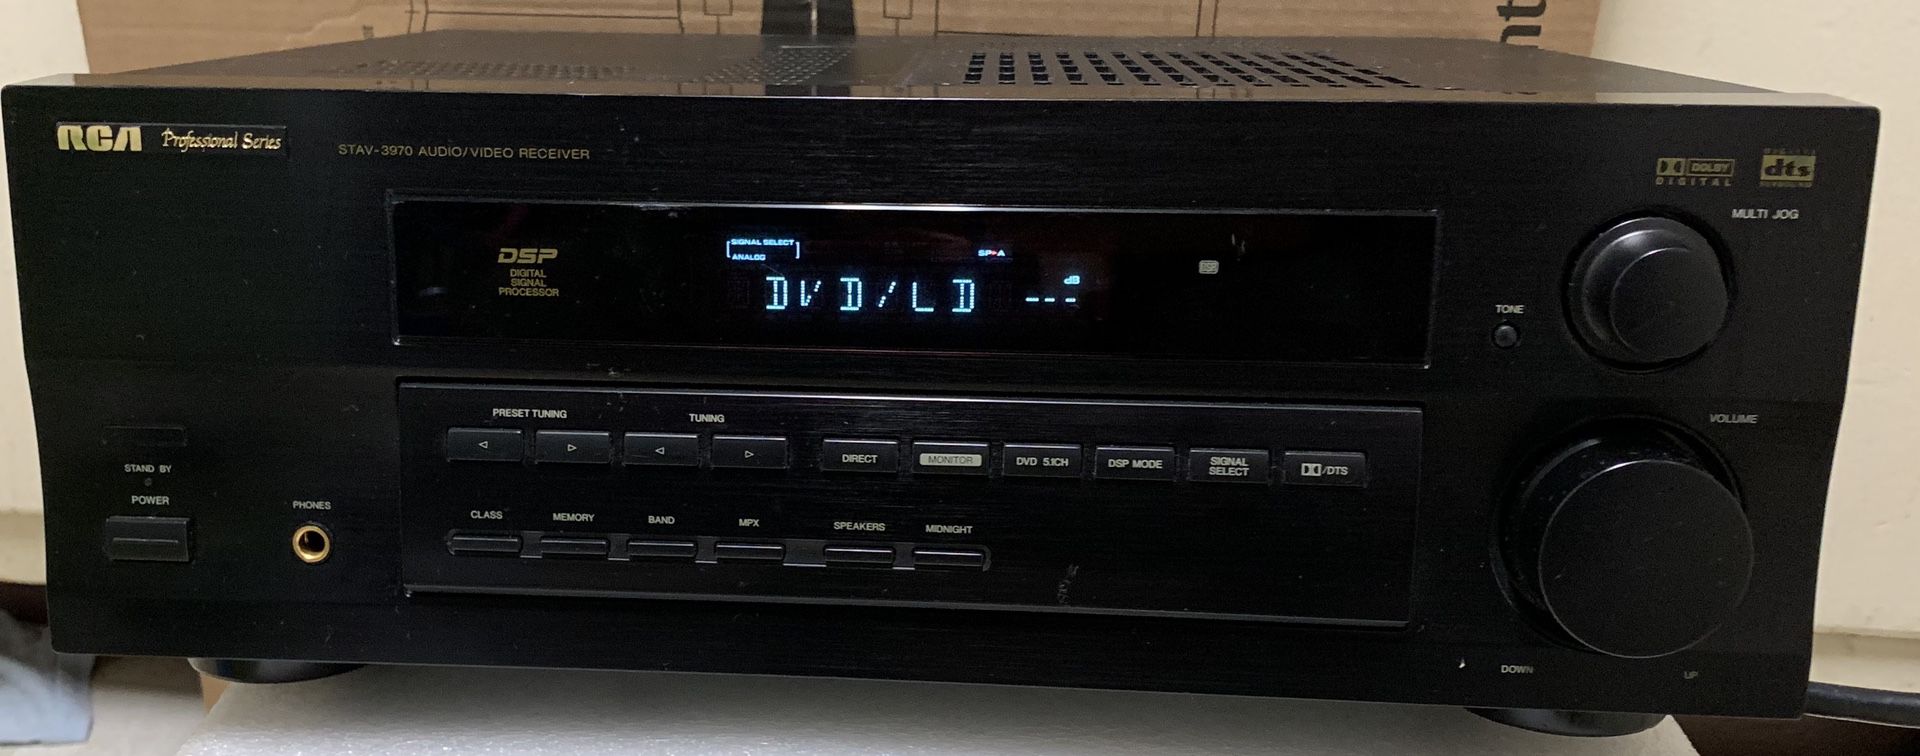 RCA Professional series STAV-3970 Audio/Video receiver